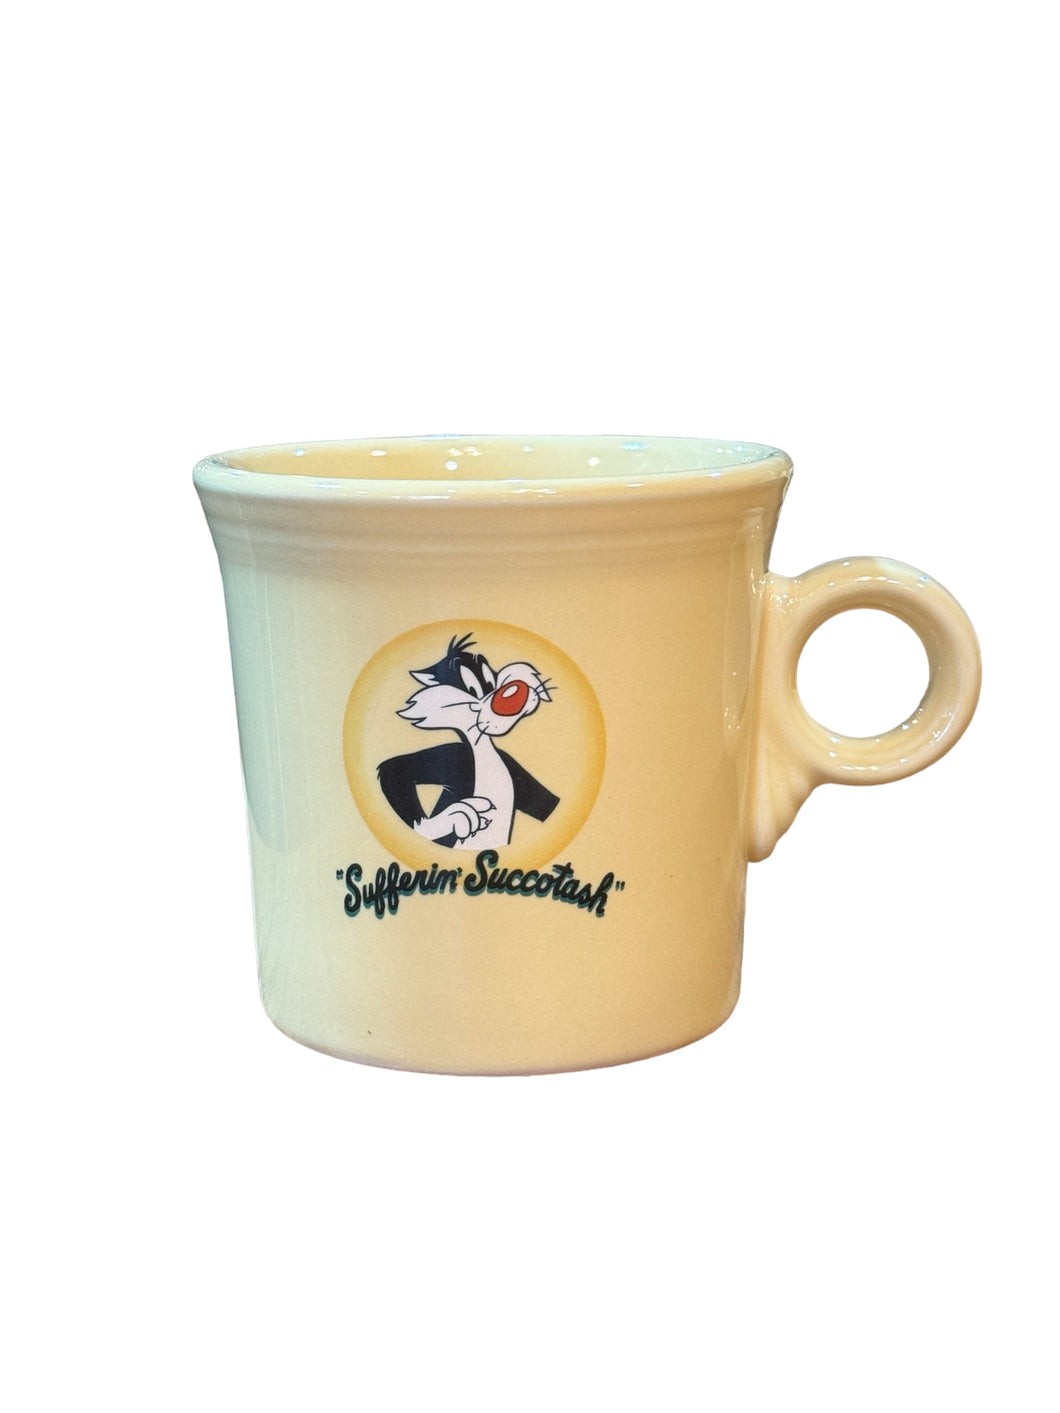 Fiesta Mug Cup Looney Tunes Warner Bros Syvester 